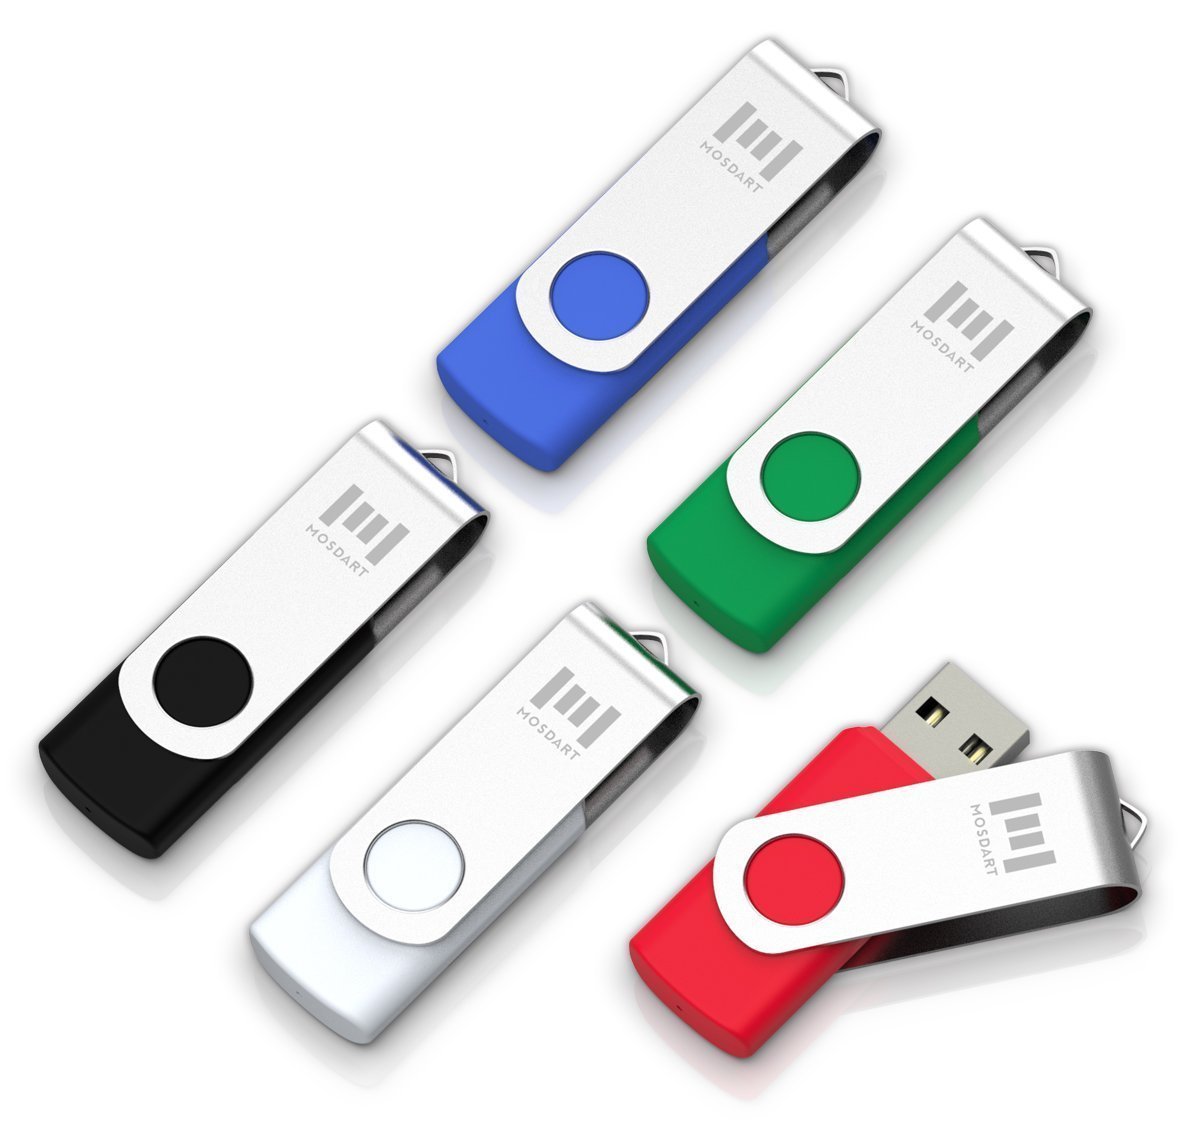 USB Metallic Cover Couleur BLEU 8GB USB 2.0 - Flash Drive Swivel Thumb Drives Memory Sticks Jump Drive Zip Drive Led Indicator, BLUE